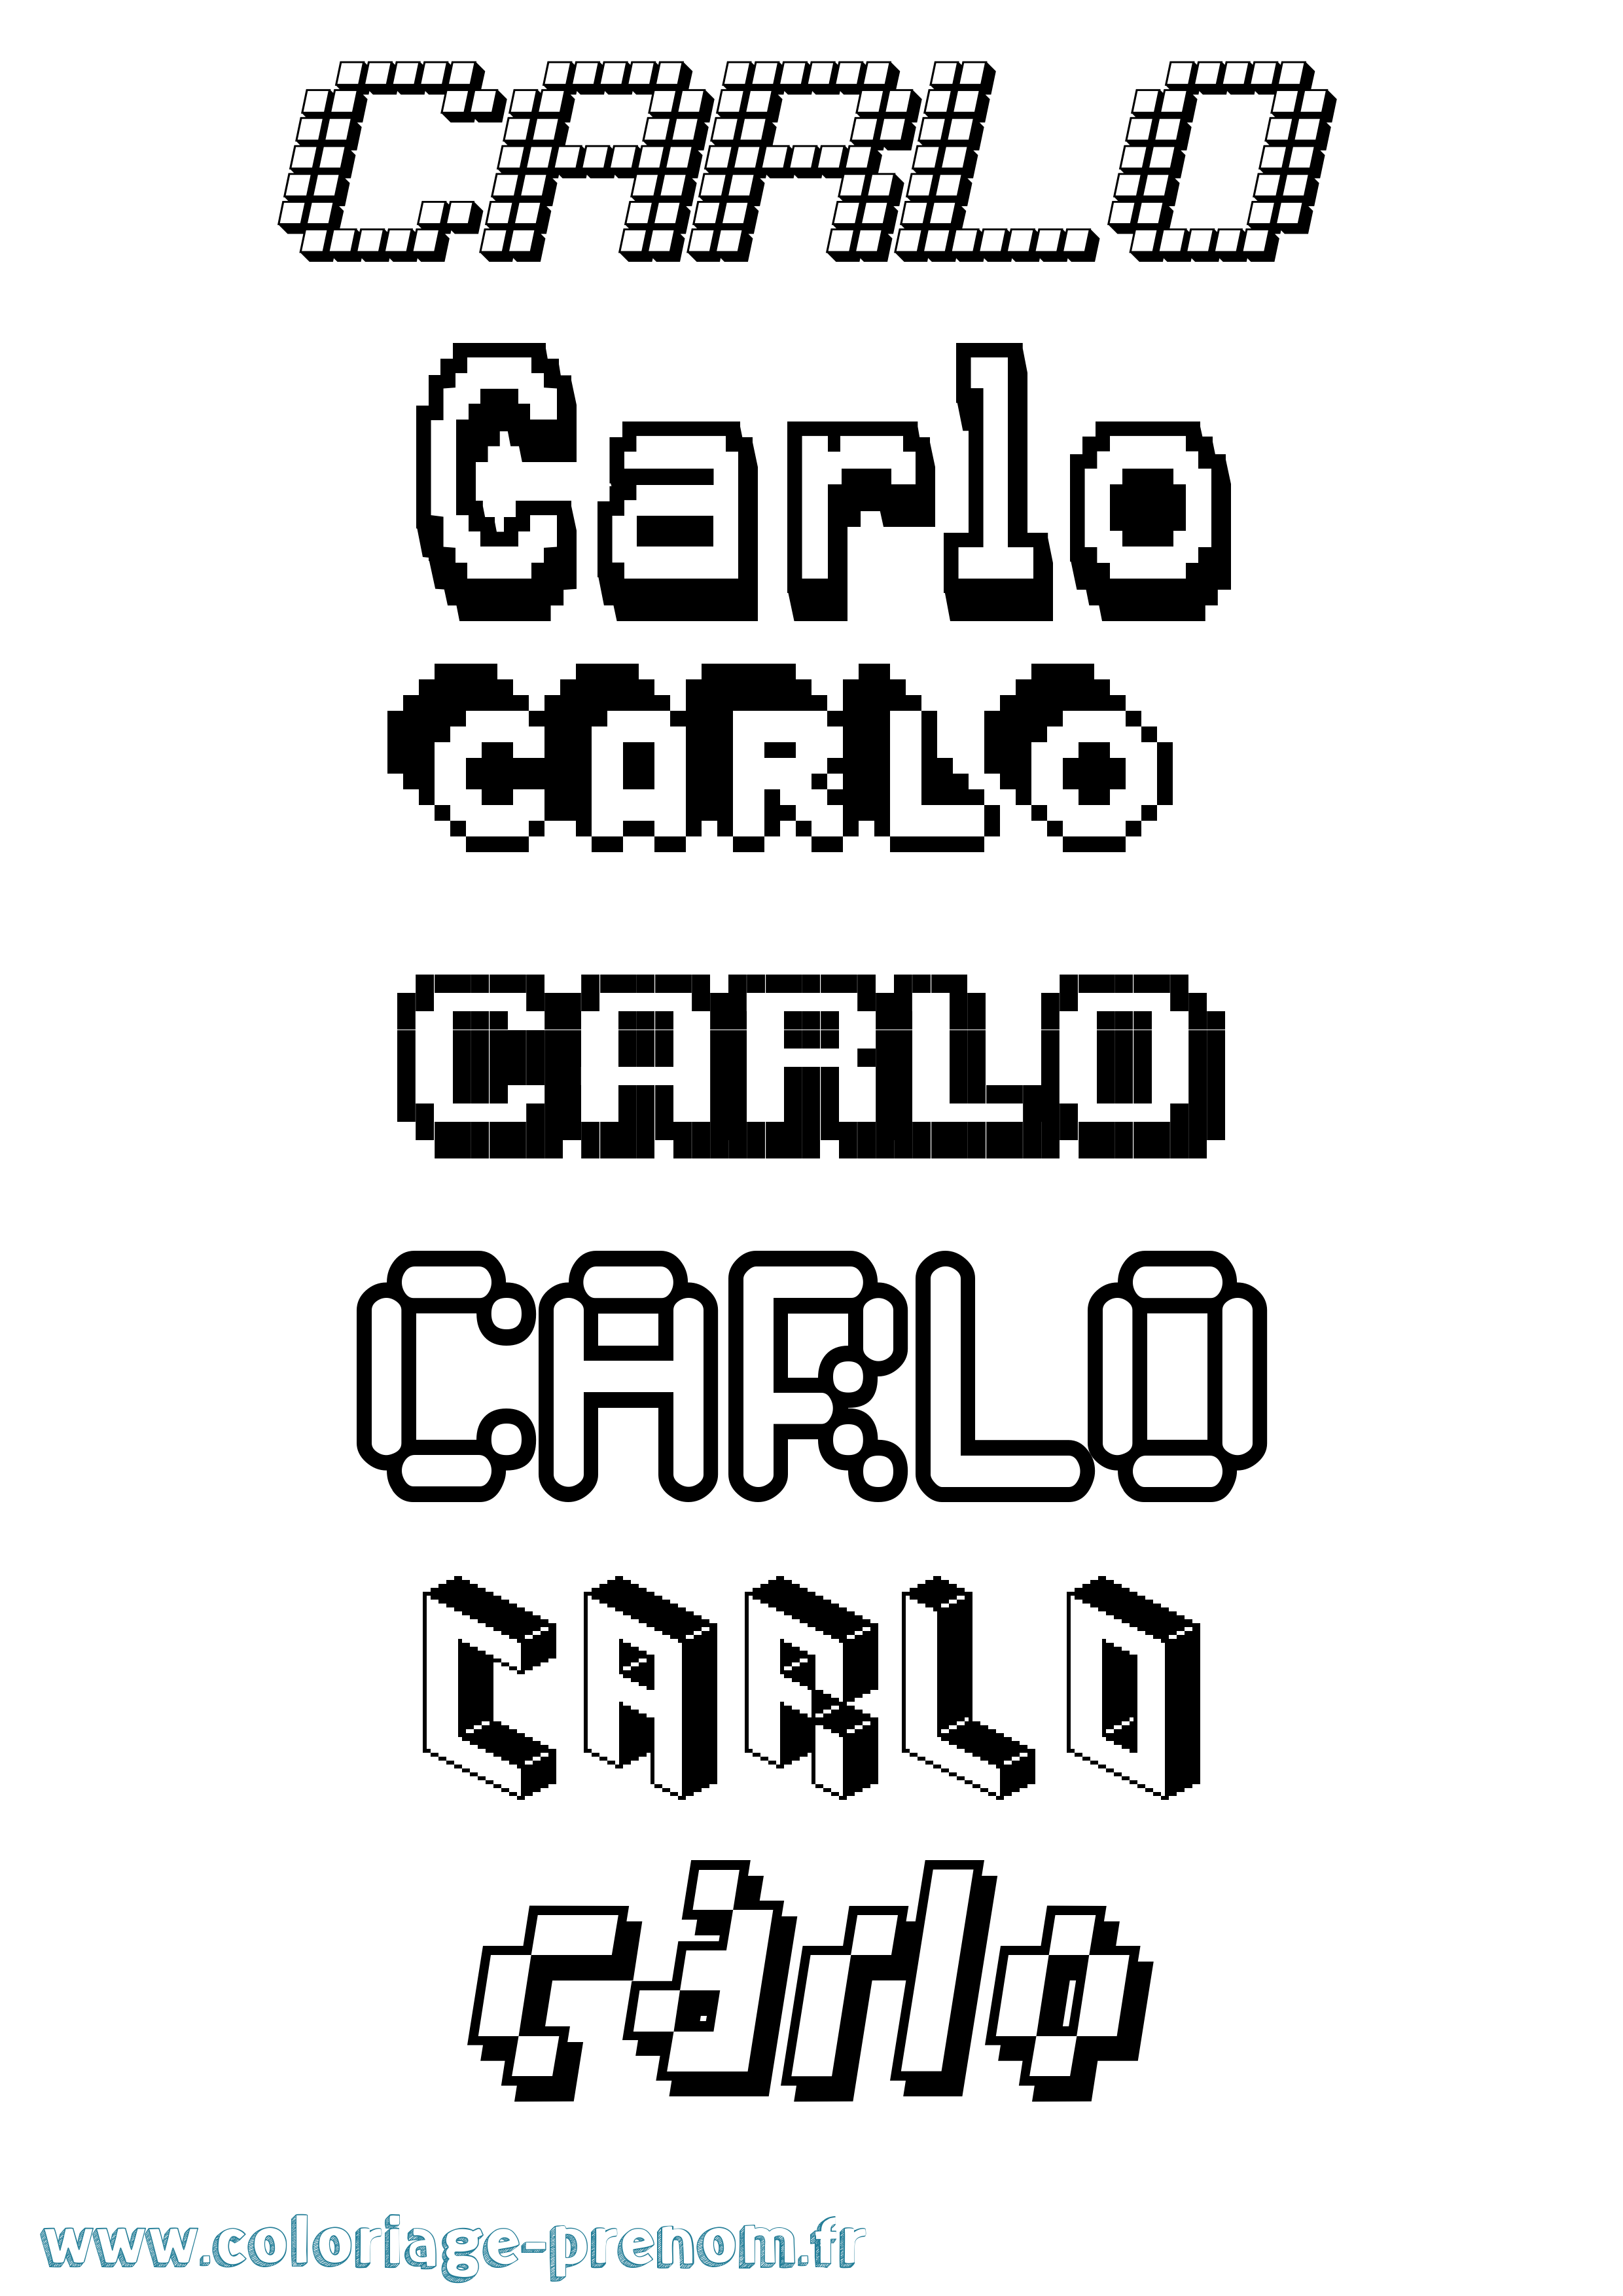 Coloriage prénom Carlo Pixel